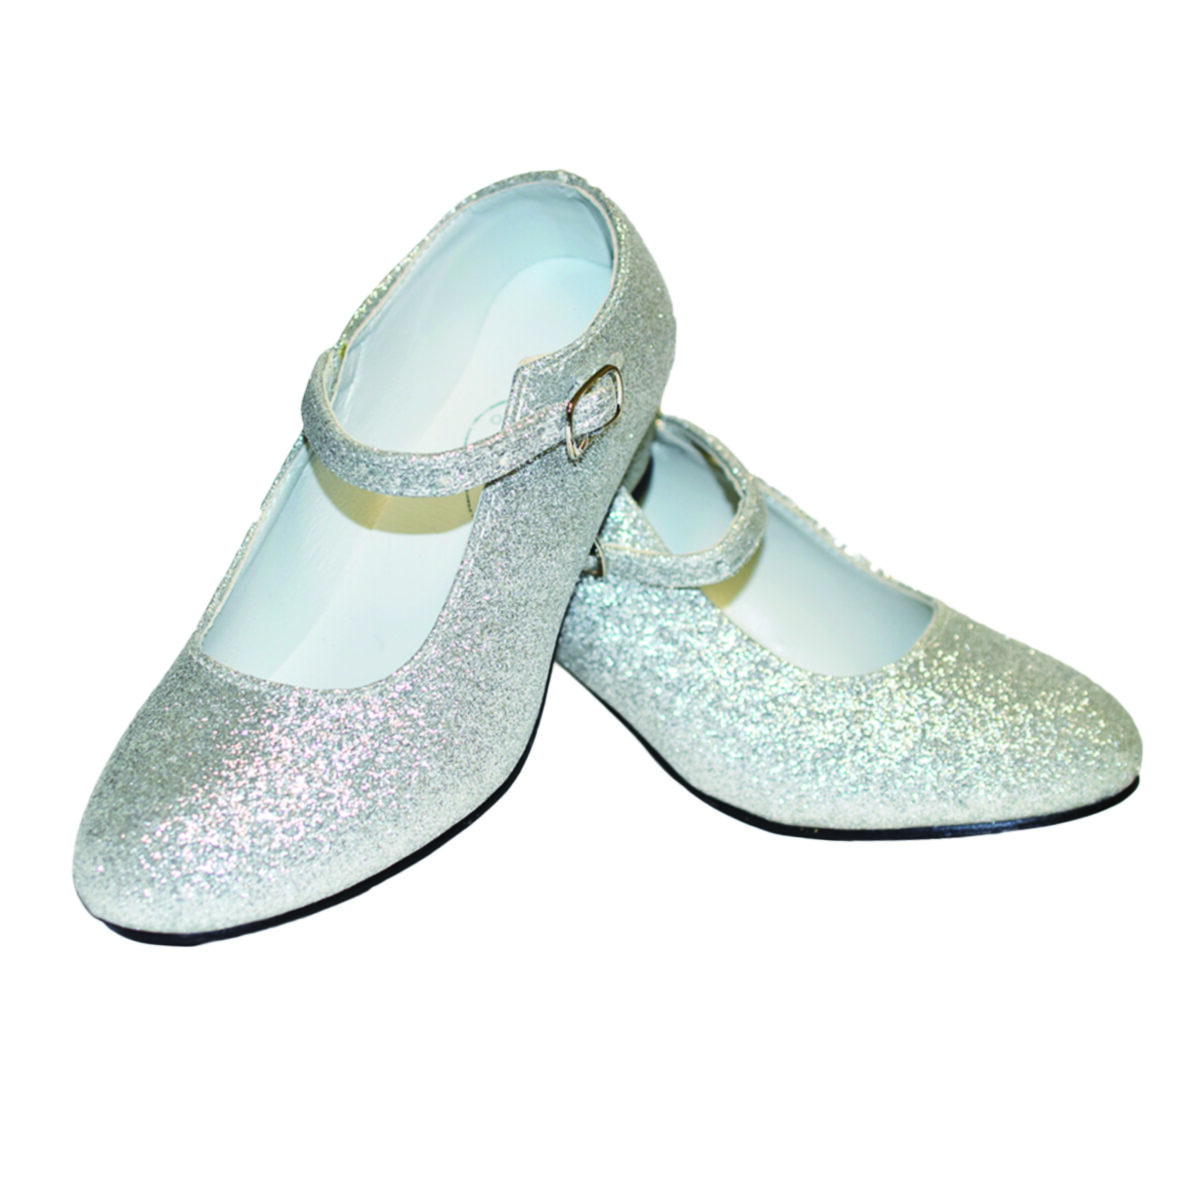 Zapatos Princesa Plata con Purpurina